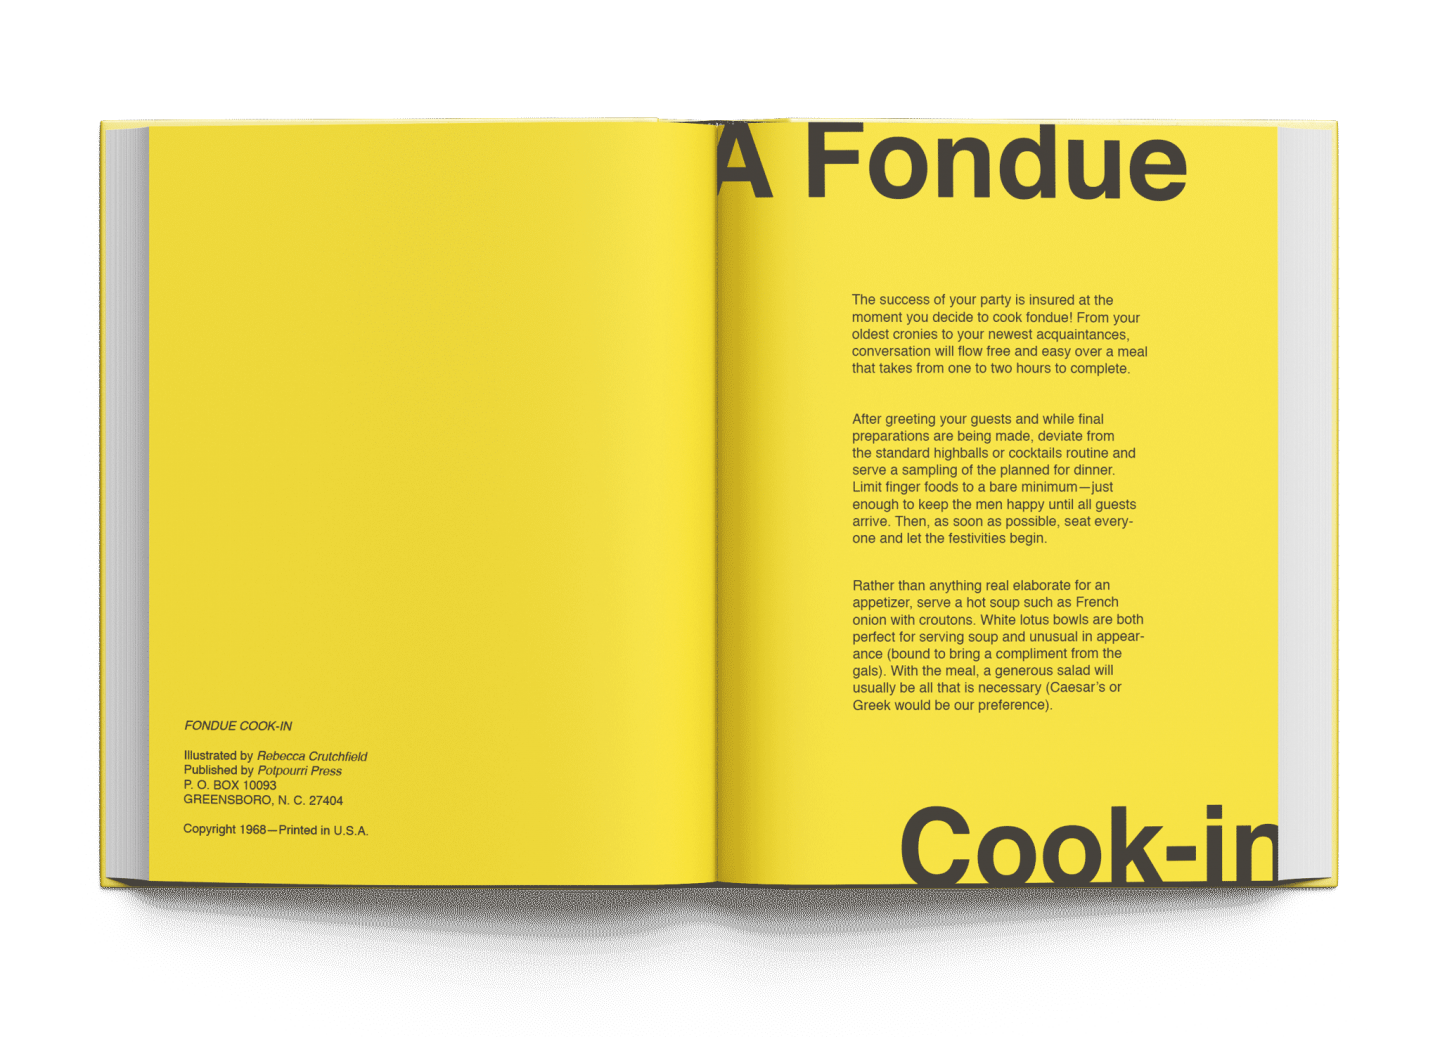 Fondue Cookin